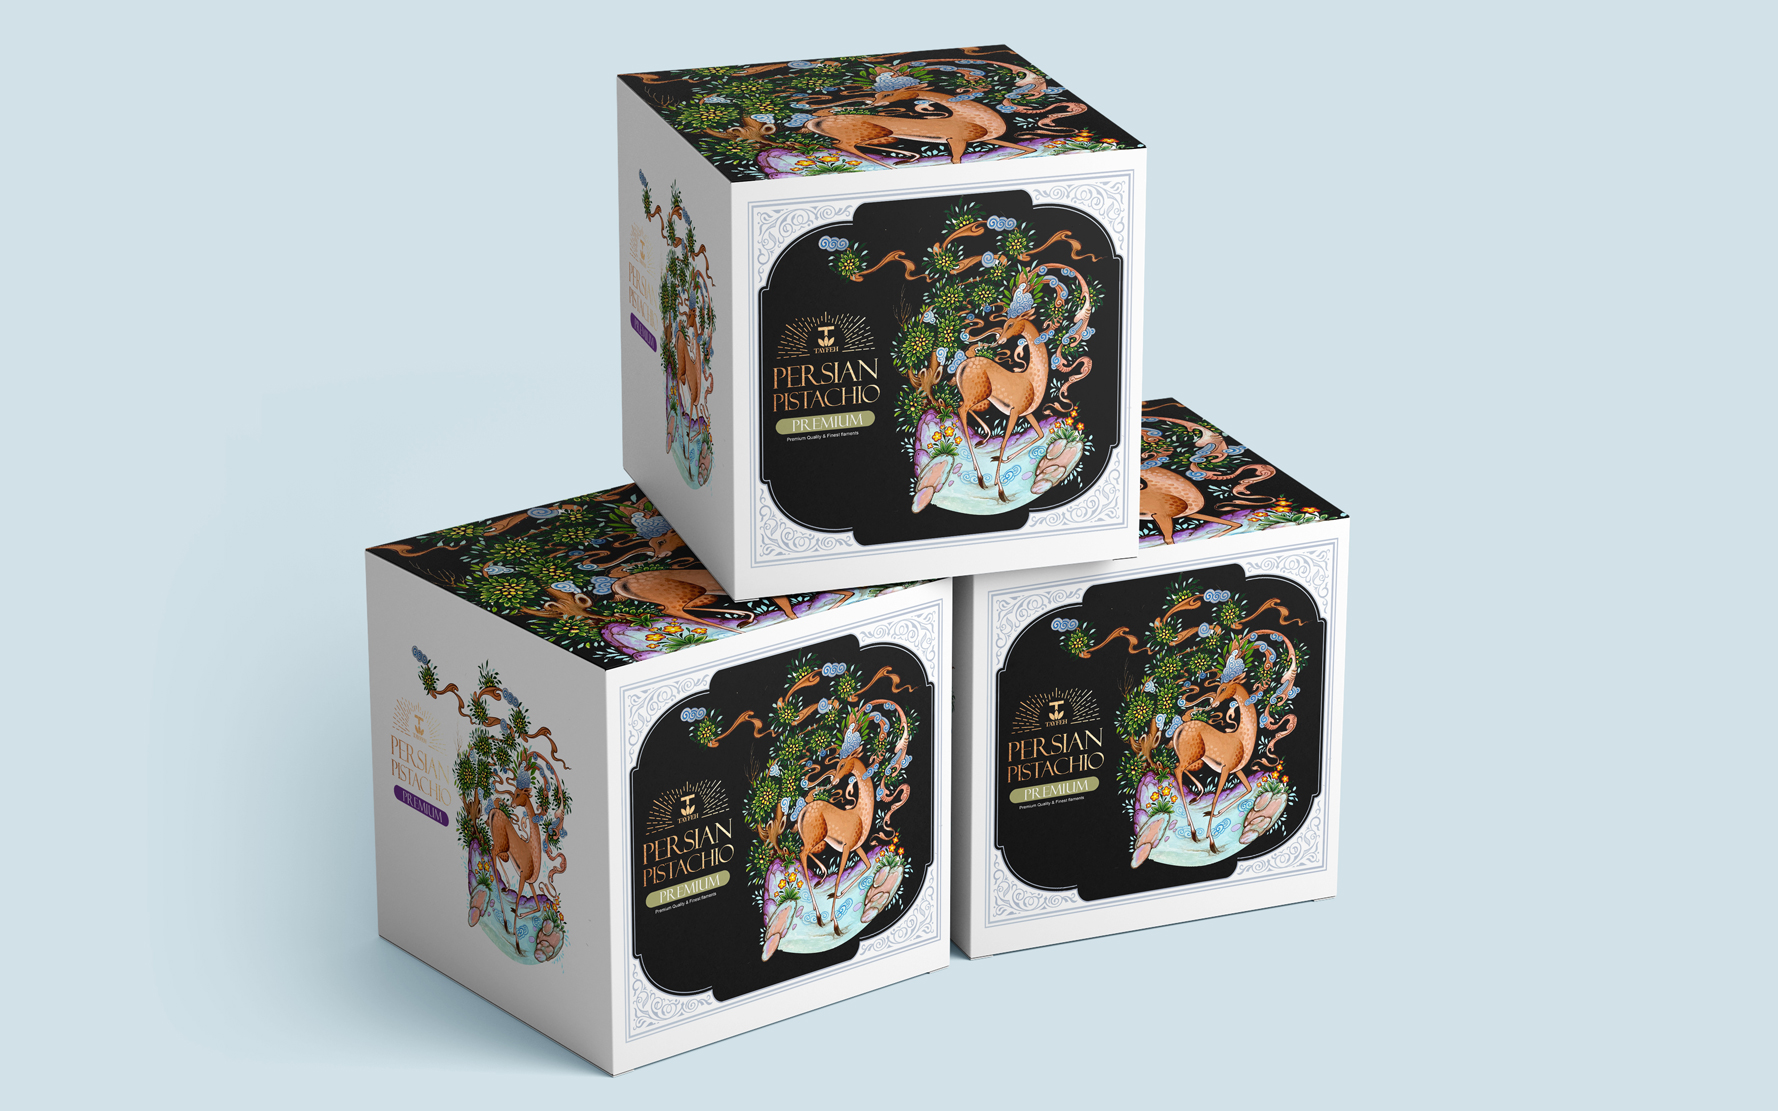 Taha Fakouri Creates Packaging Design for Tayfeh Pistachio